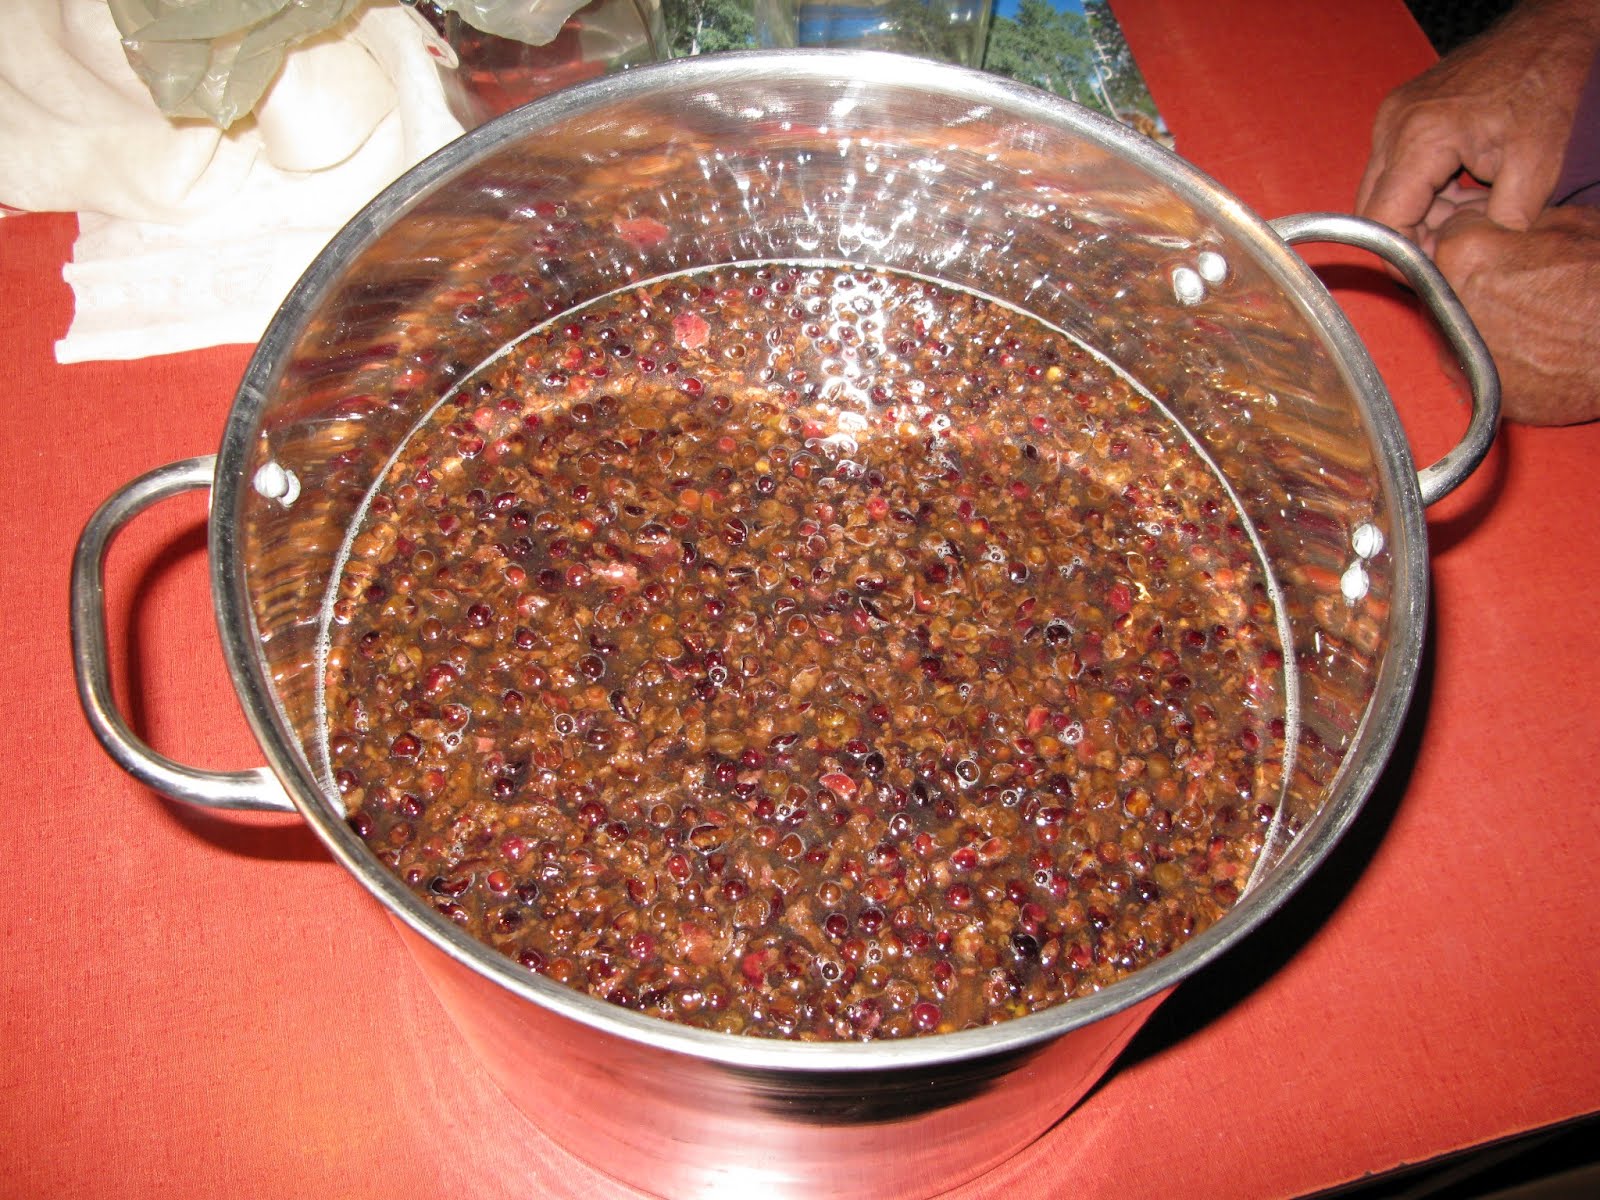 Chokecherry wine mixture before fermentation